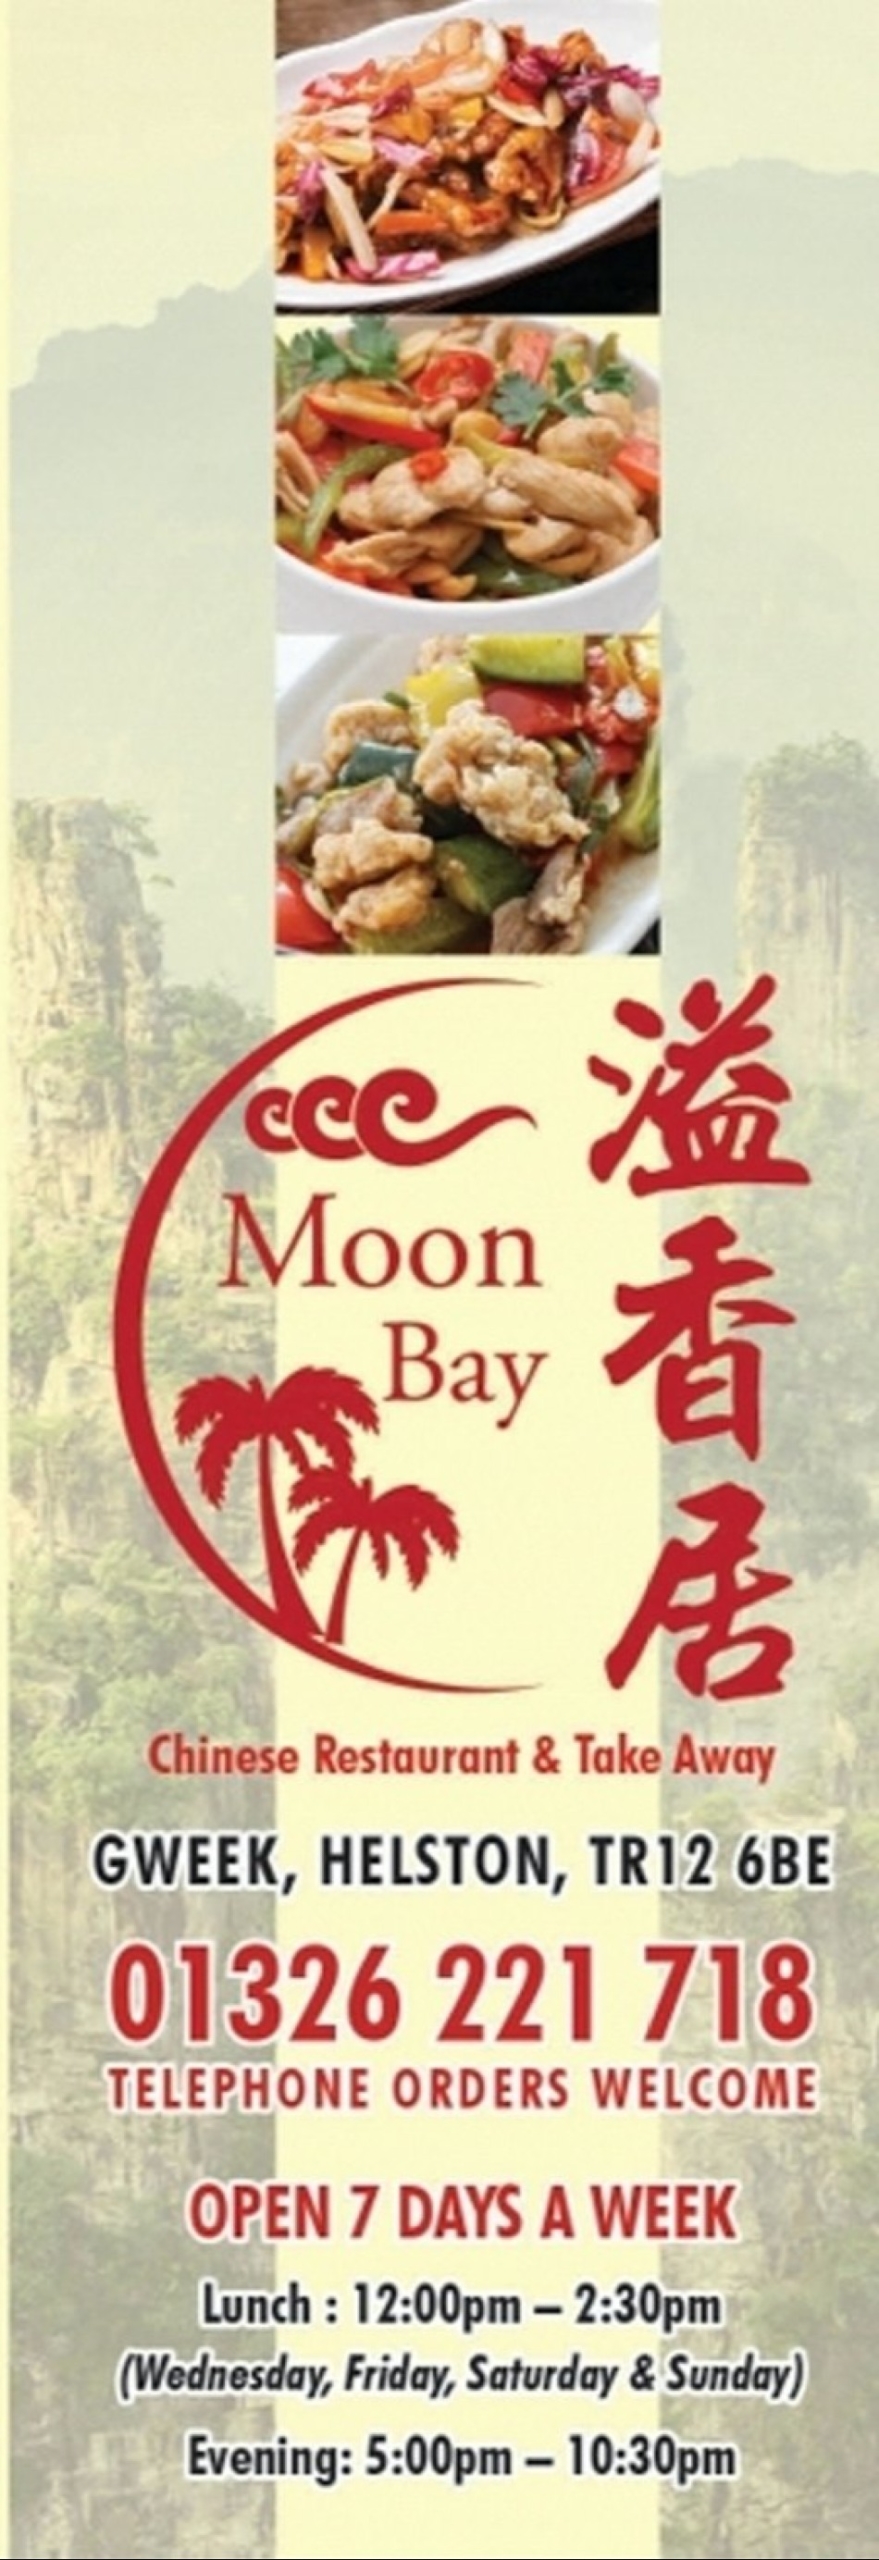 Takeaway Restaurant Menu Page - Moonbay Chinese restaurant - Helston